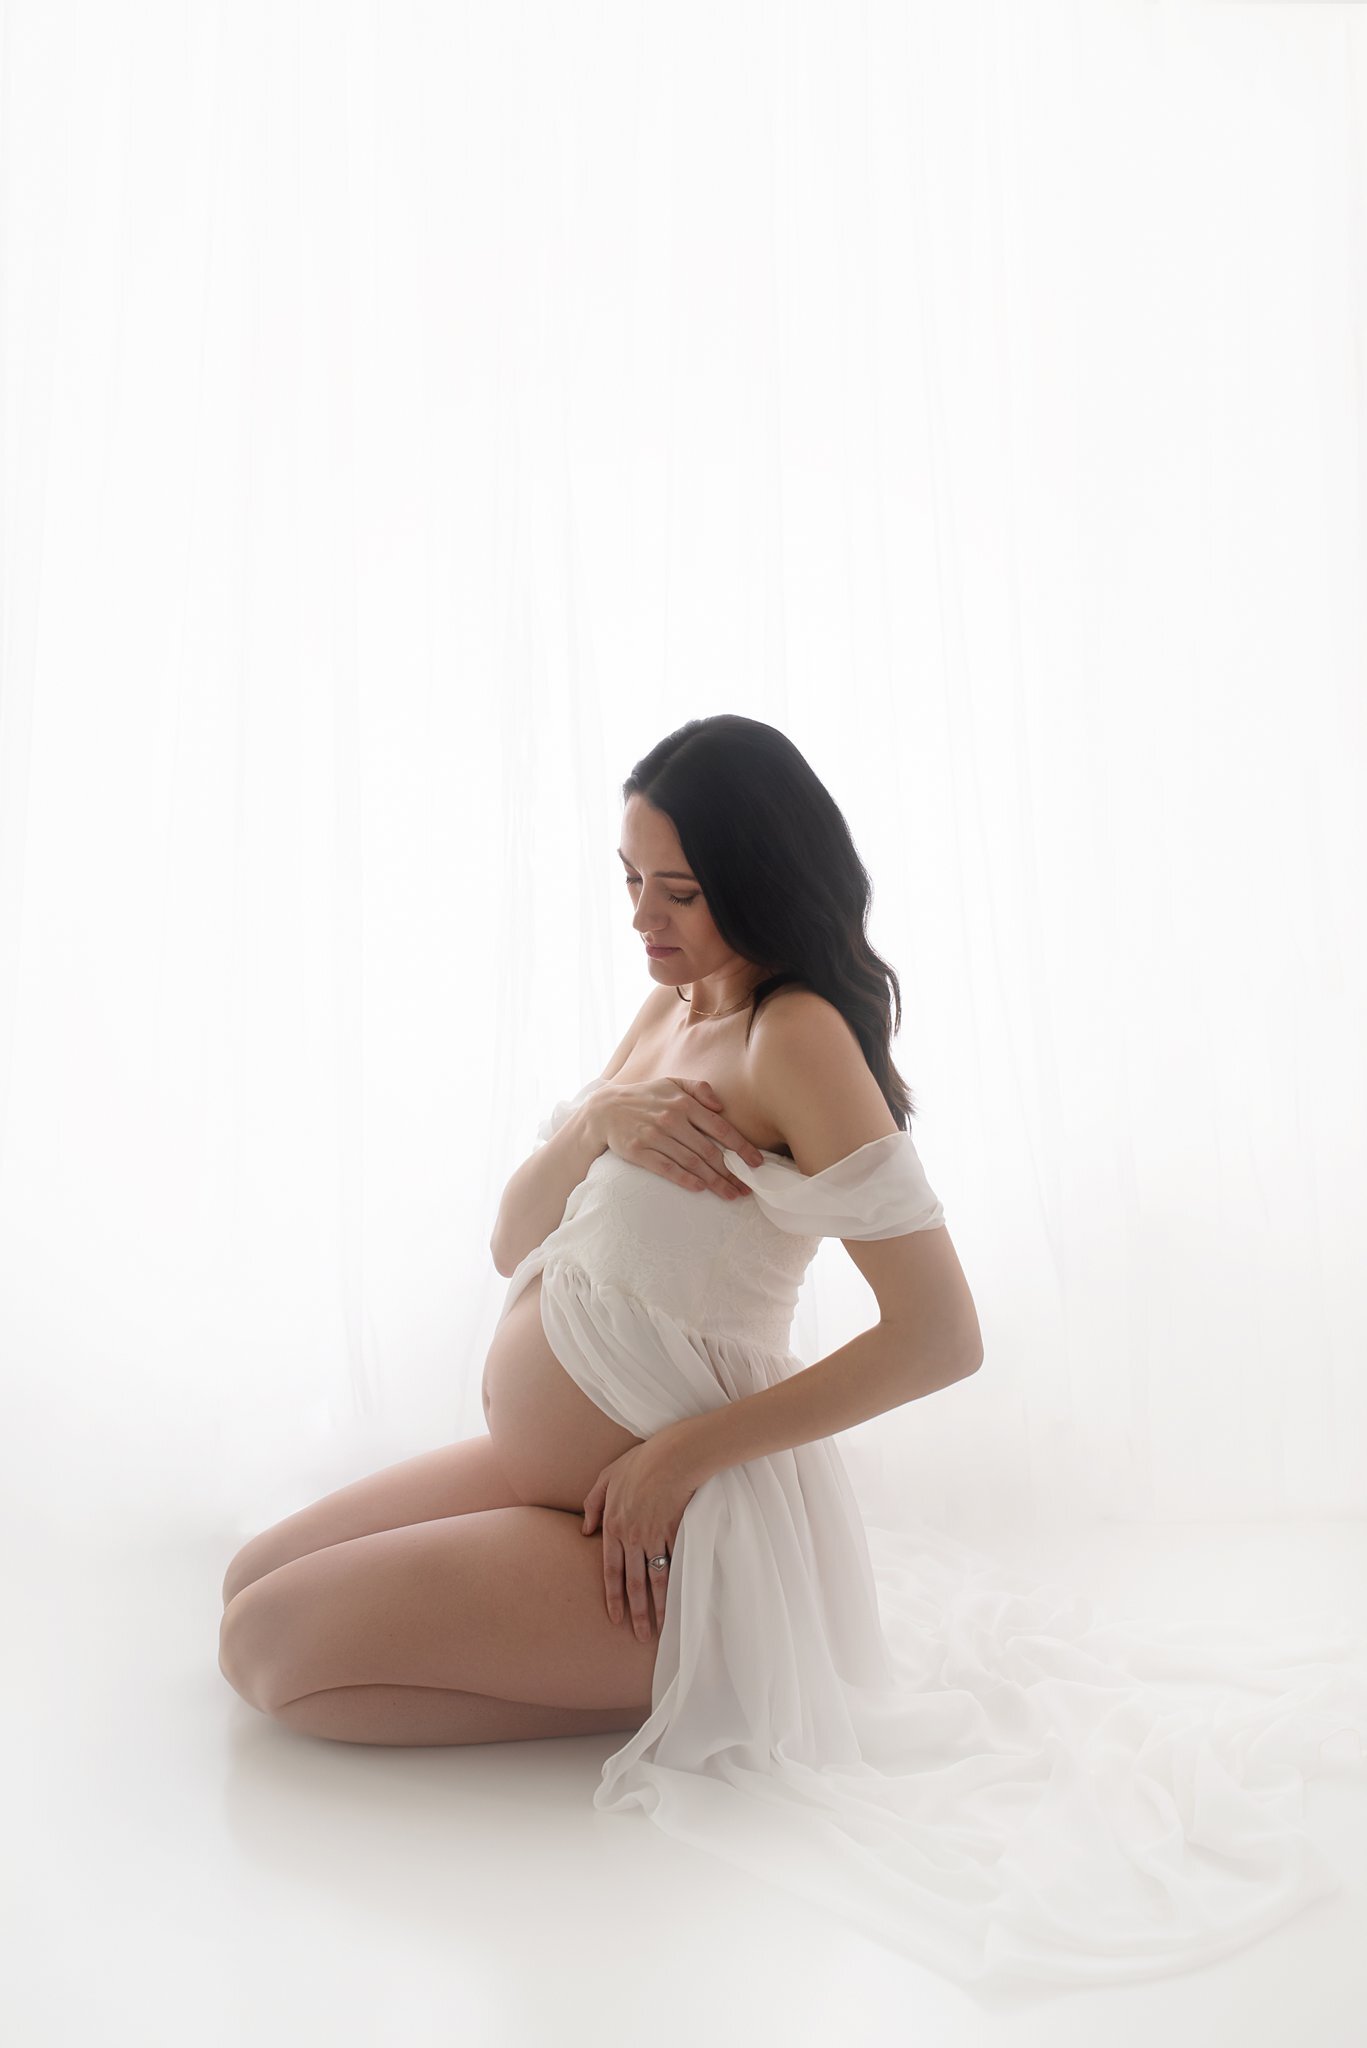 maternityphotographer-columbusohio_0008.jpg